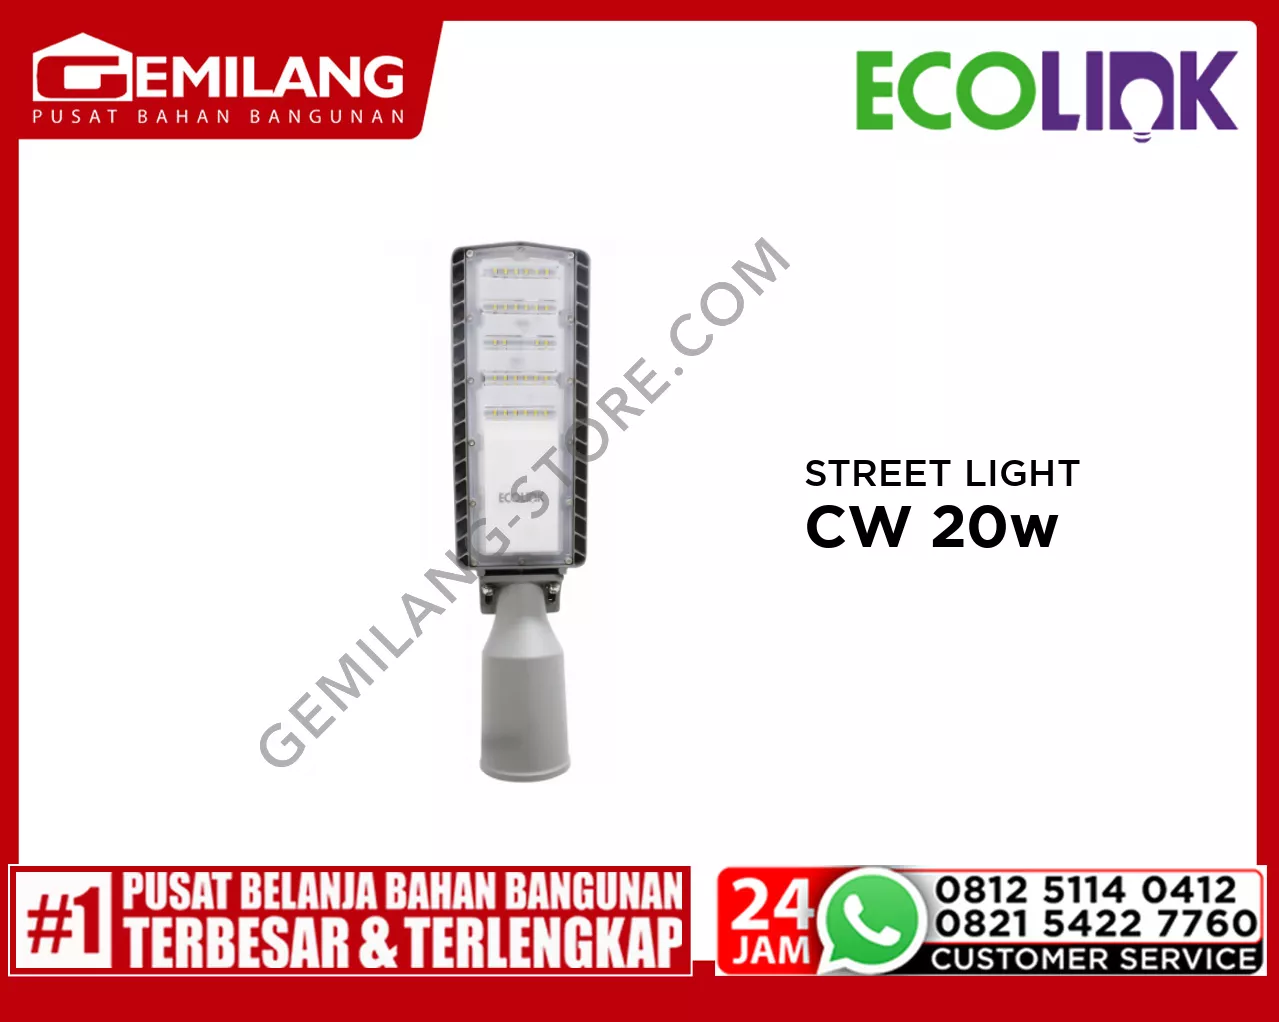 ECOLINK STREET LIGHT SL007 LED18 220-240V CW 20w